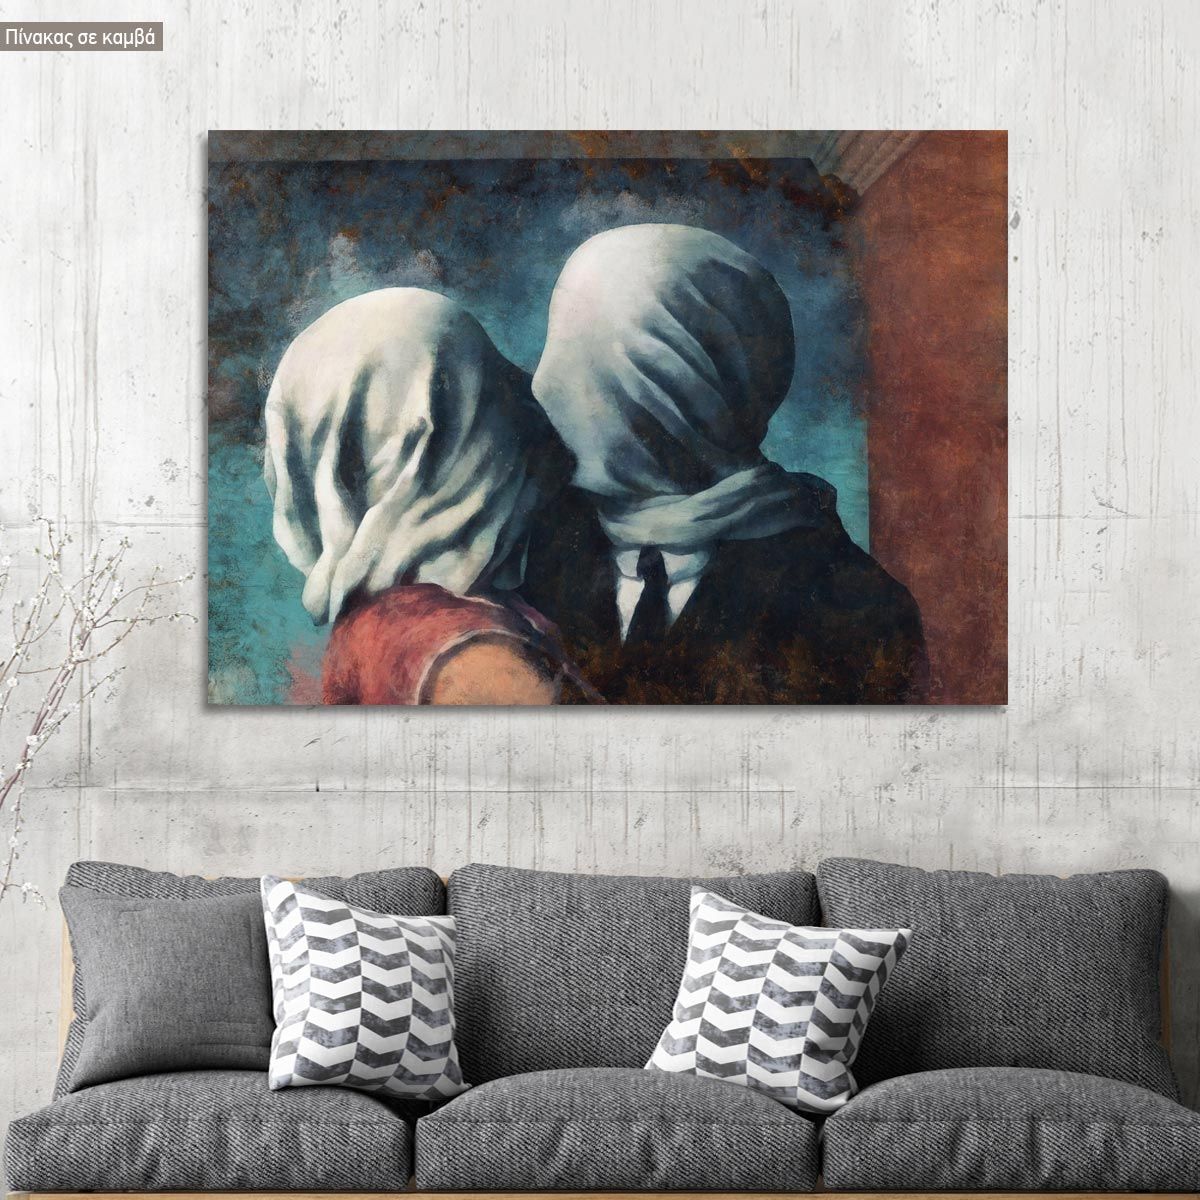 Canvas print lovers II reart (original Magritte)